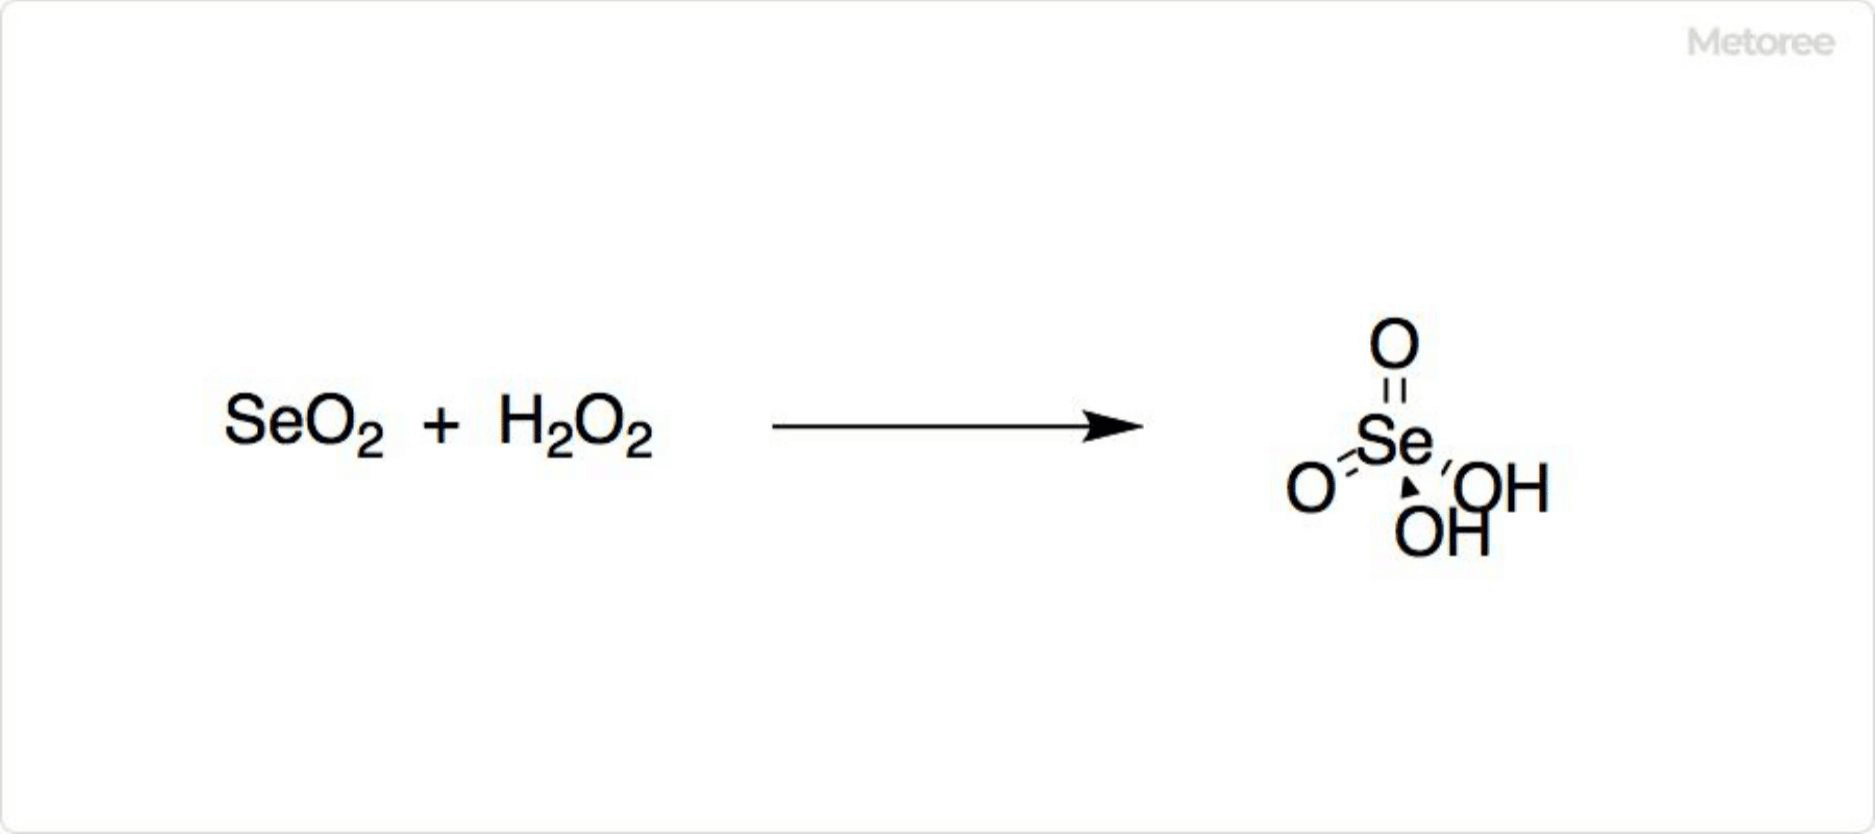 Figure 2. Reactions of Selenium Dioxide